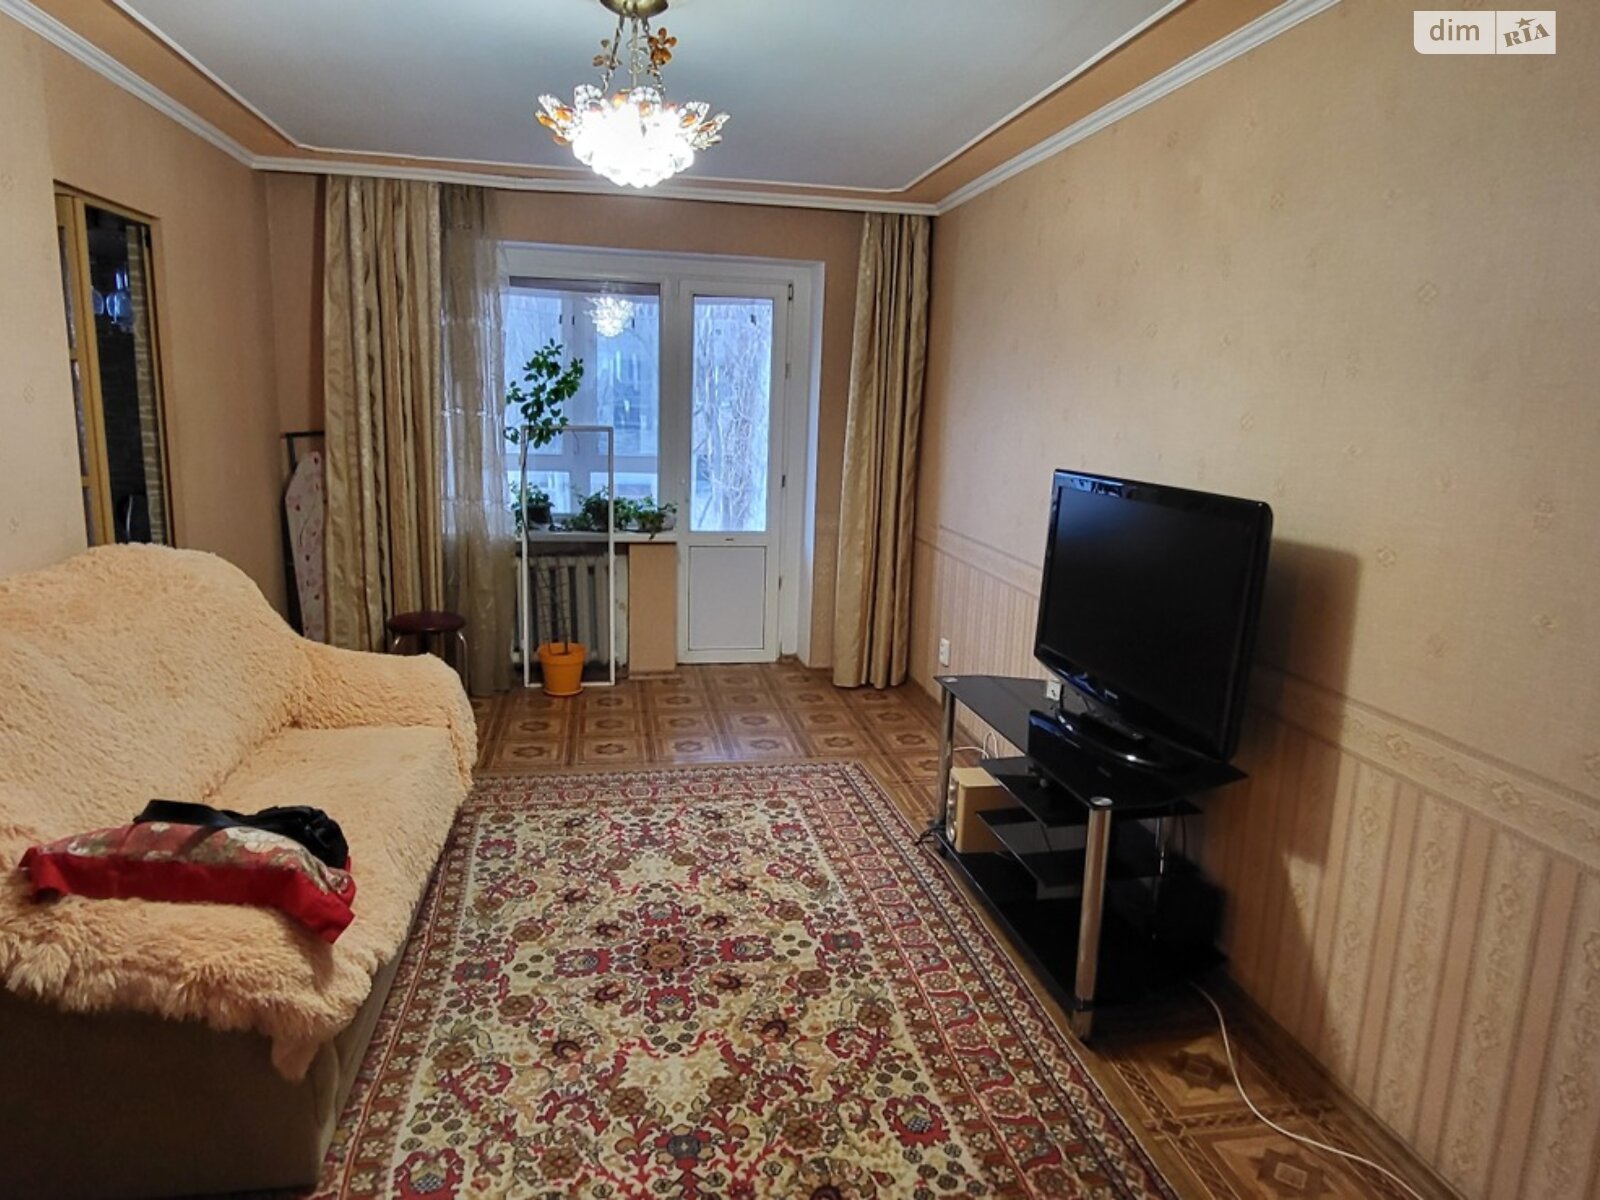 Продажа трехкомнатной квартиры в Николаеве, на ул. Крылова, район Лески фото 1